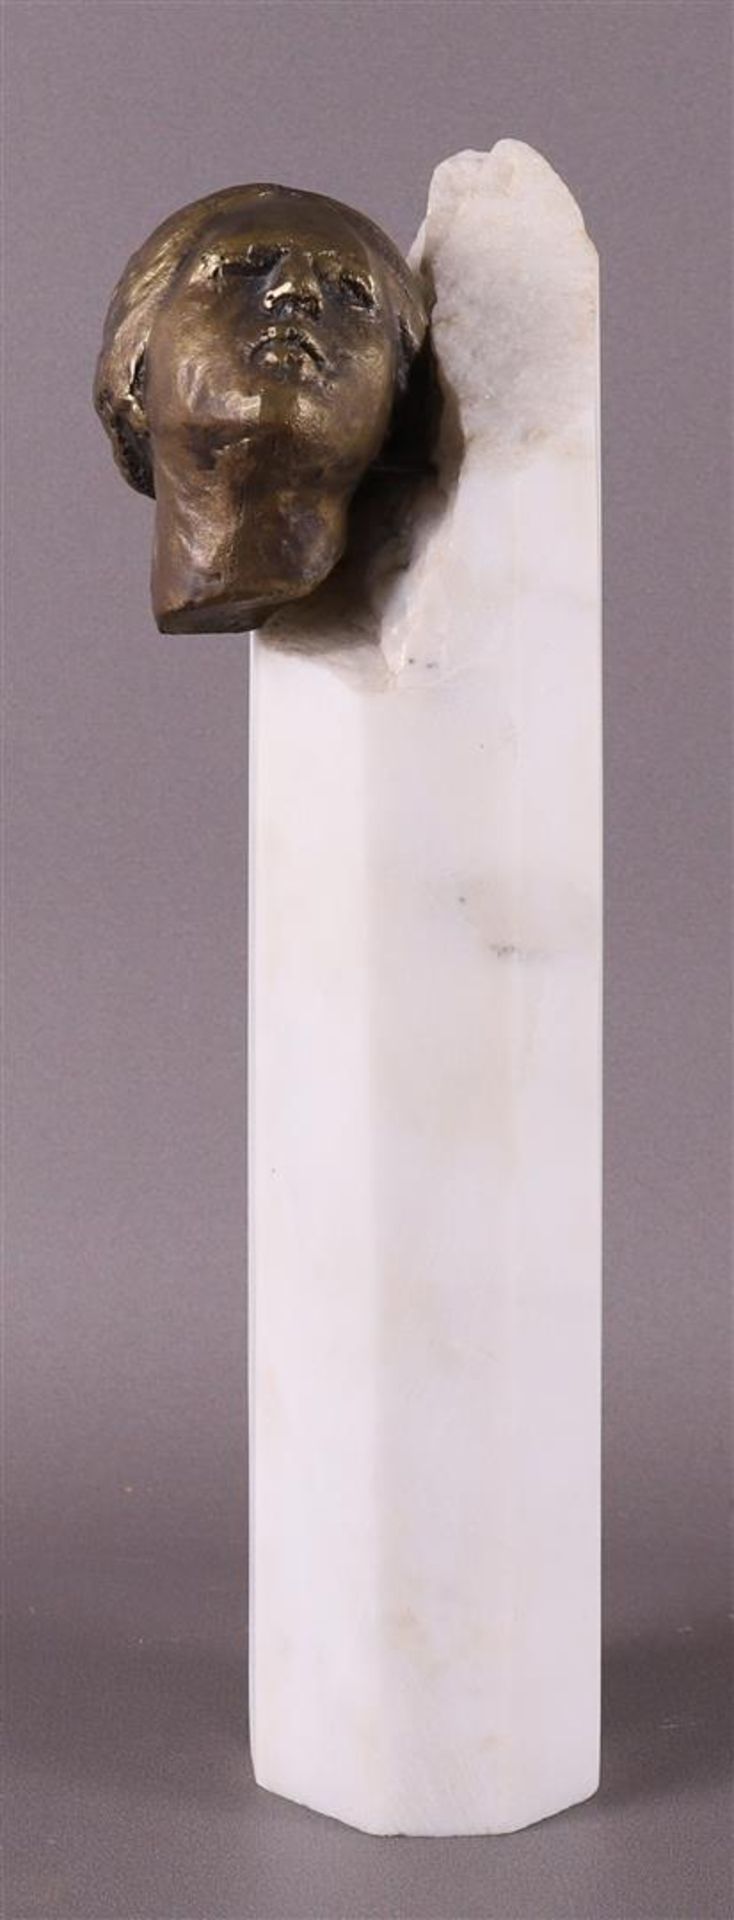 A bronze female head on a white marble column, signed 'Kphtikos X - '89